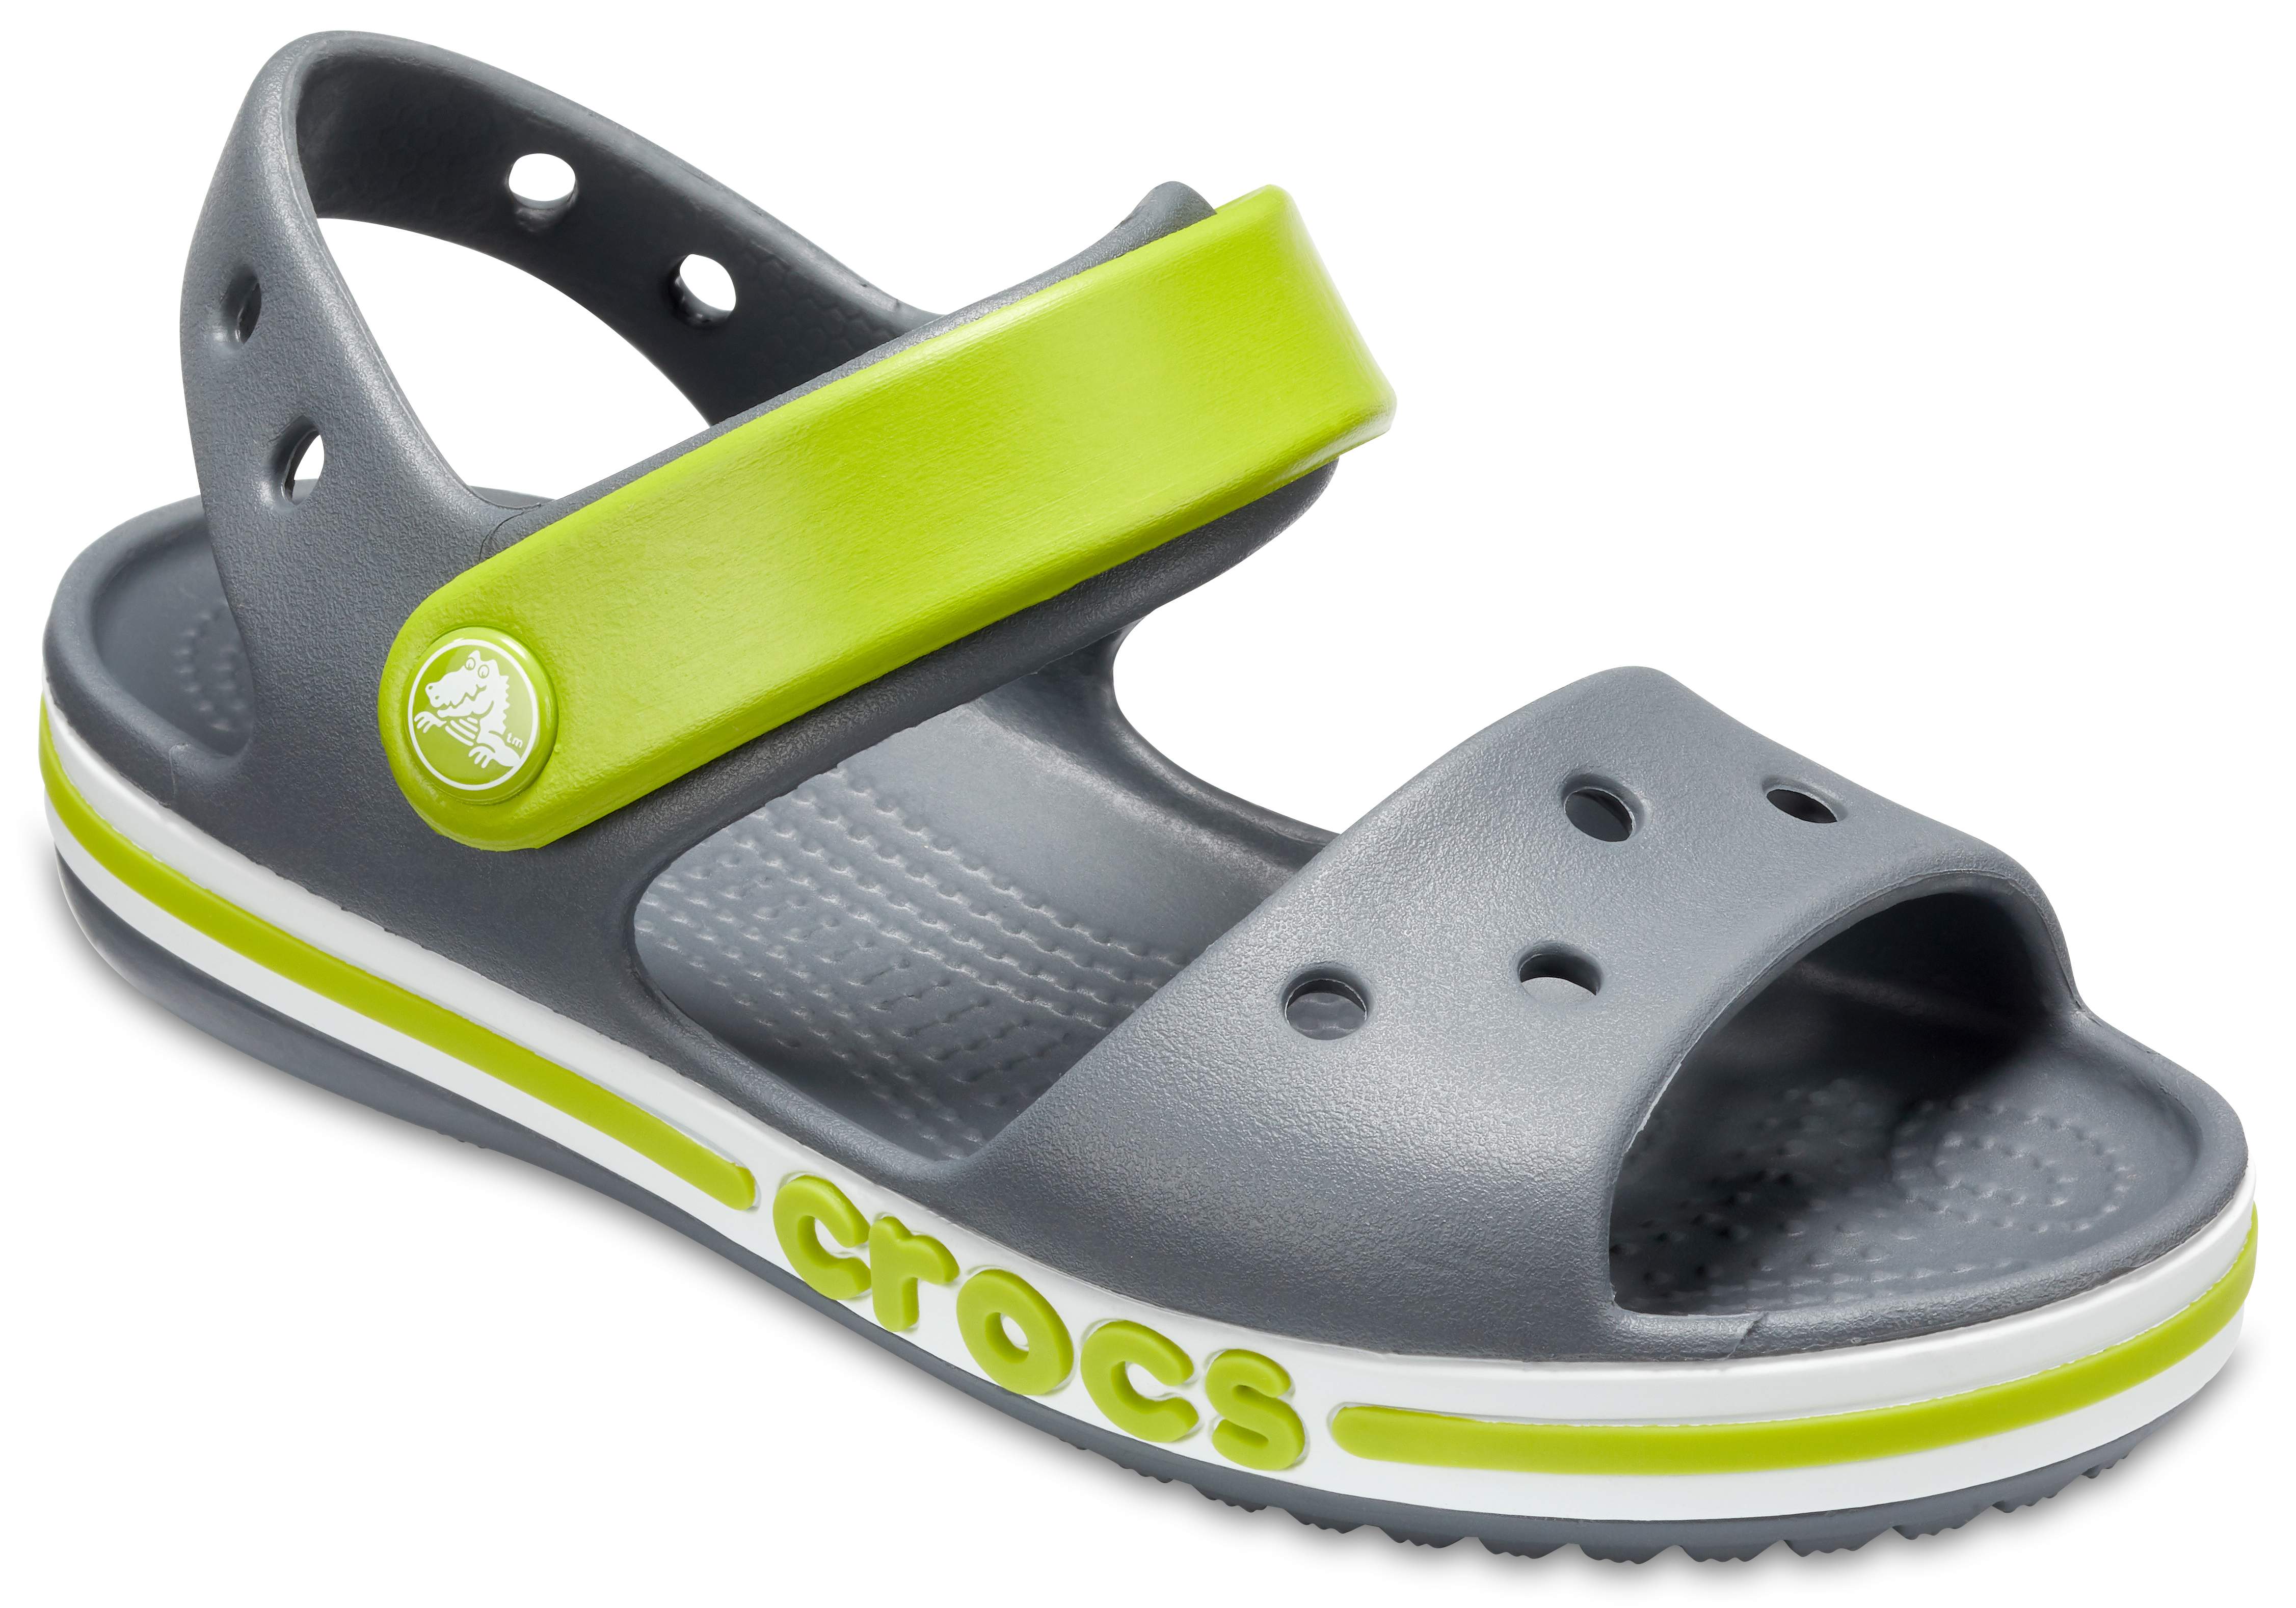 Kids' Bayaband Sandal - Crocs